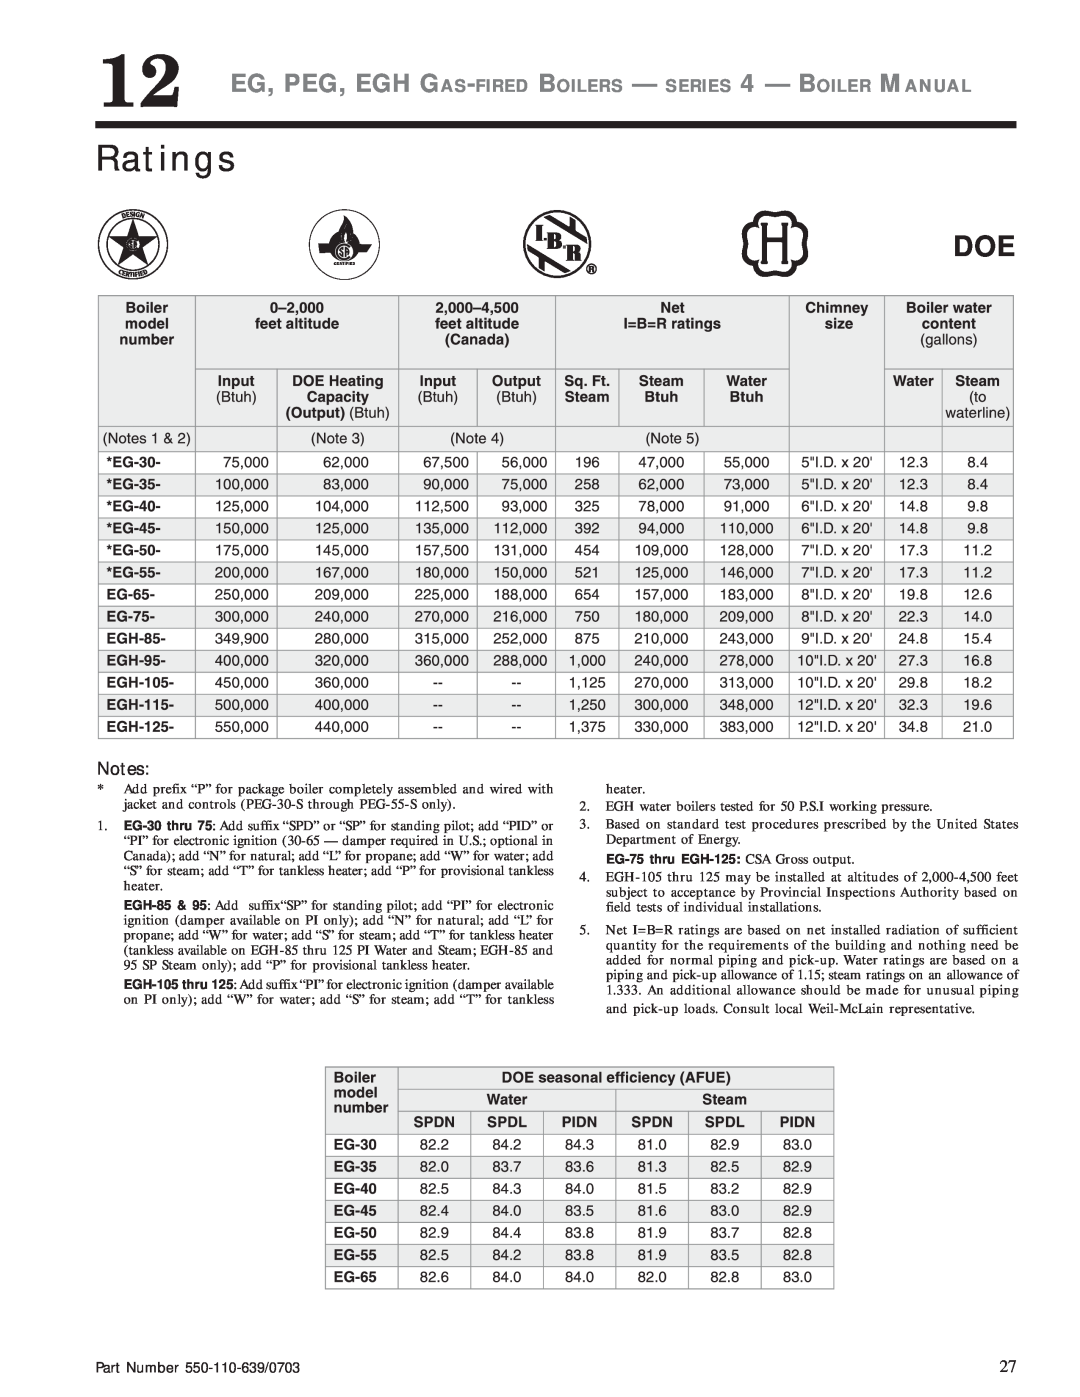 Weil-McLain EG manual Ratings, Part Number 550-110-639/0703 